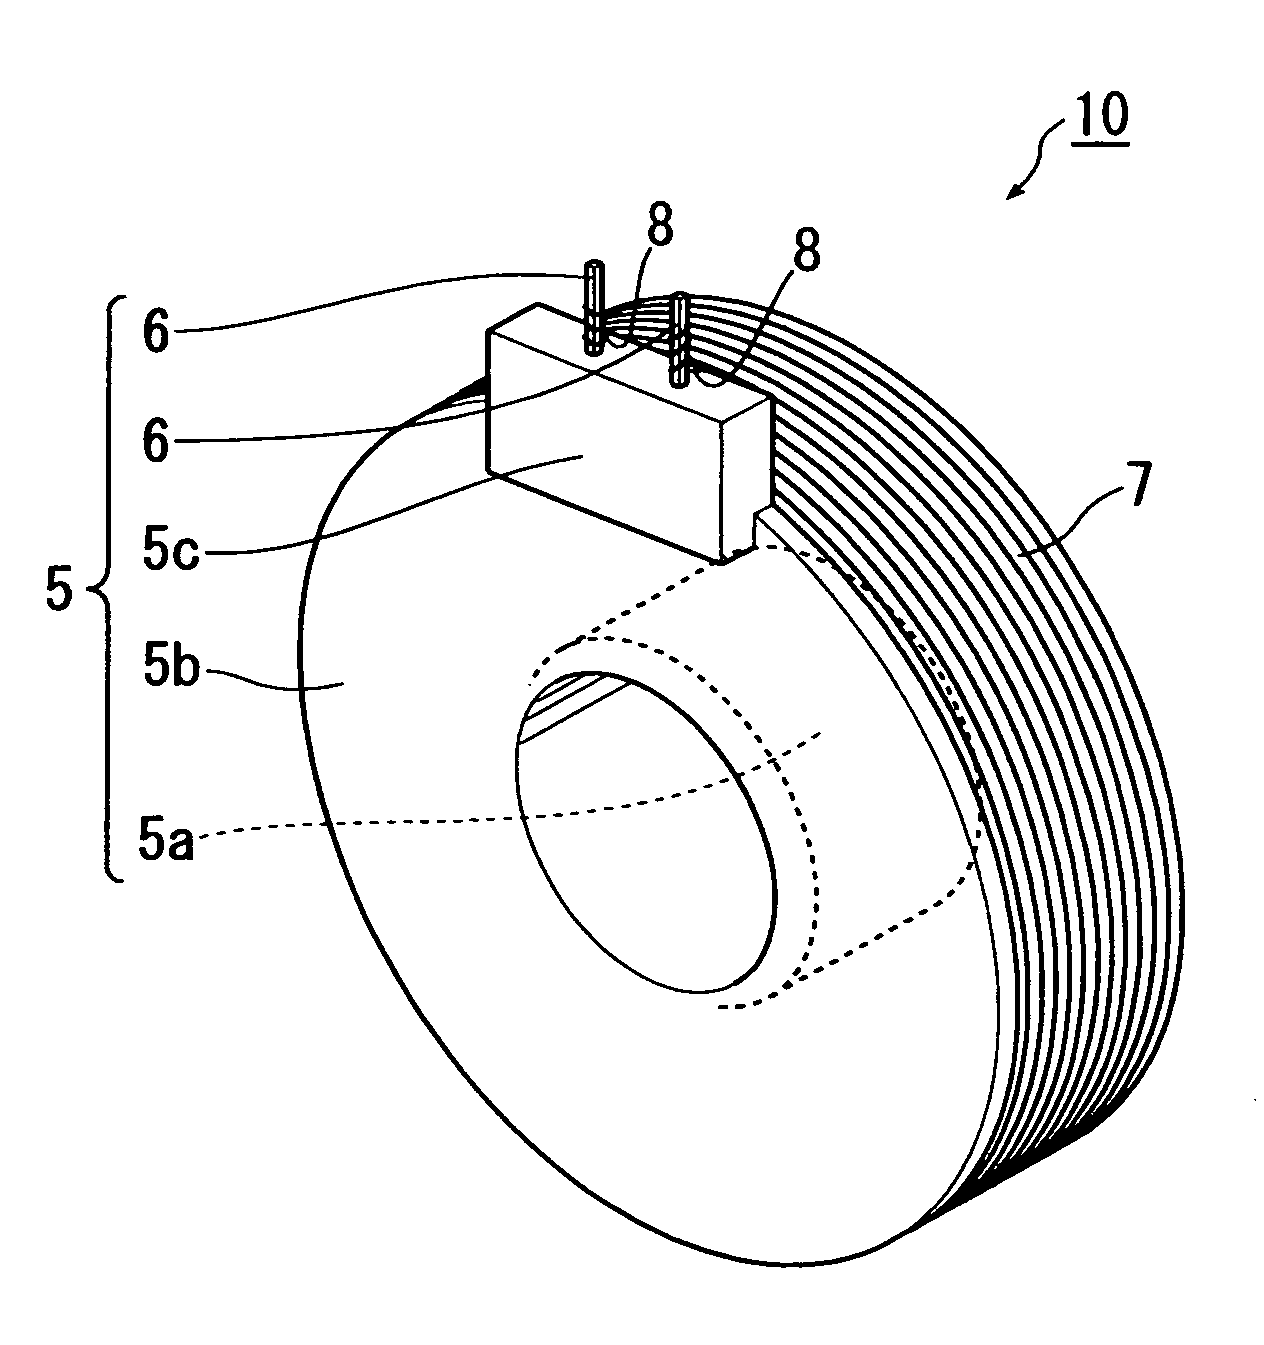 Bobbin, coil-wound bobbin, and method of producing coil-wound bobbin